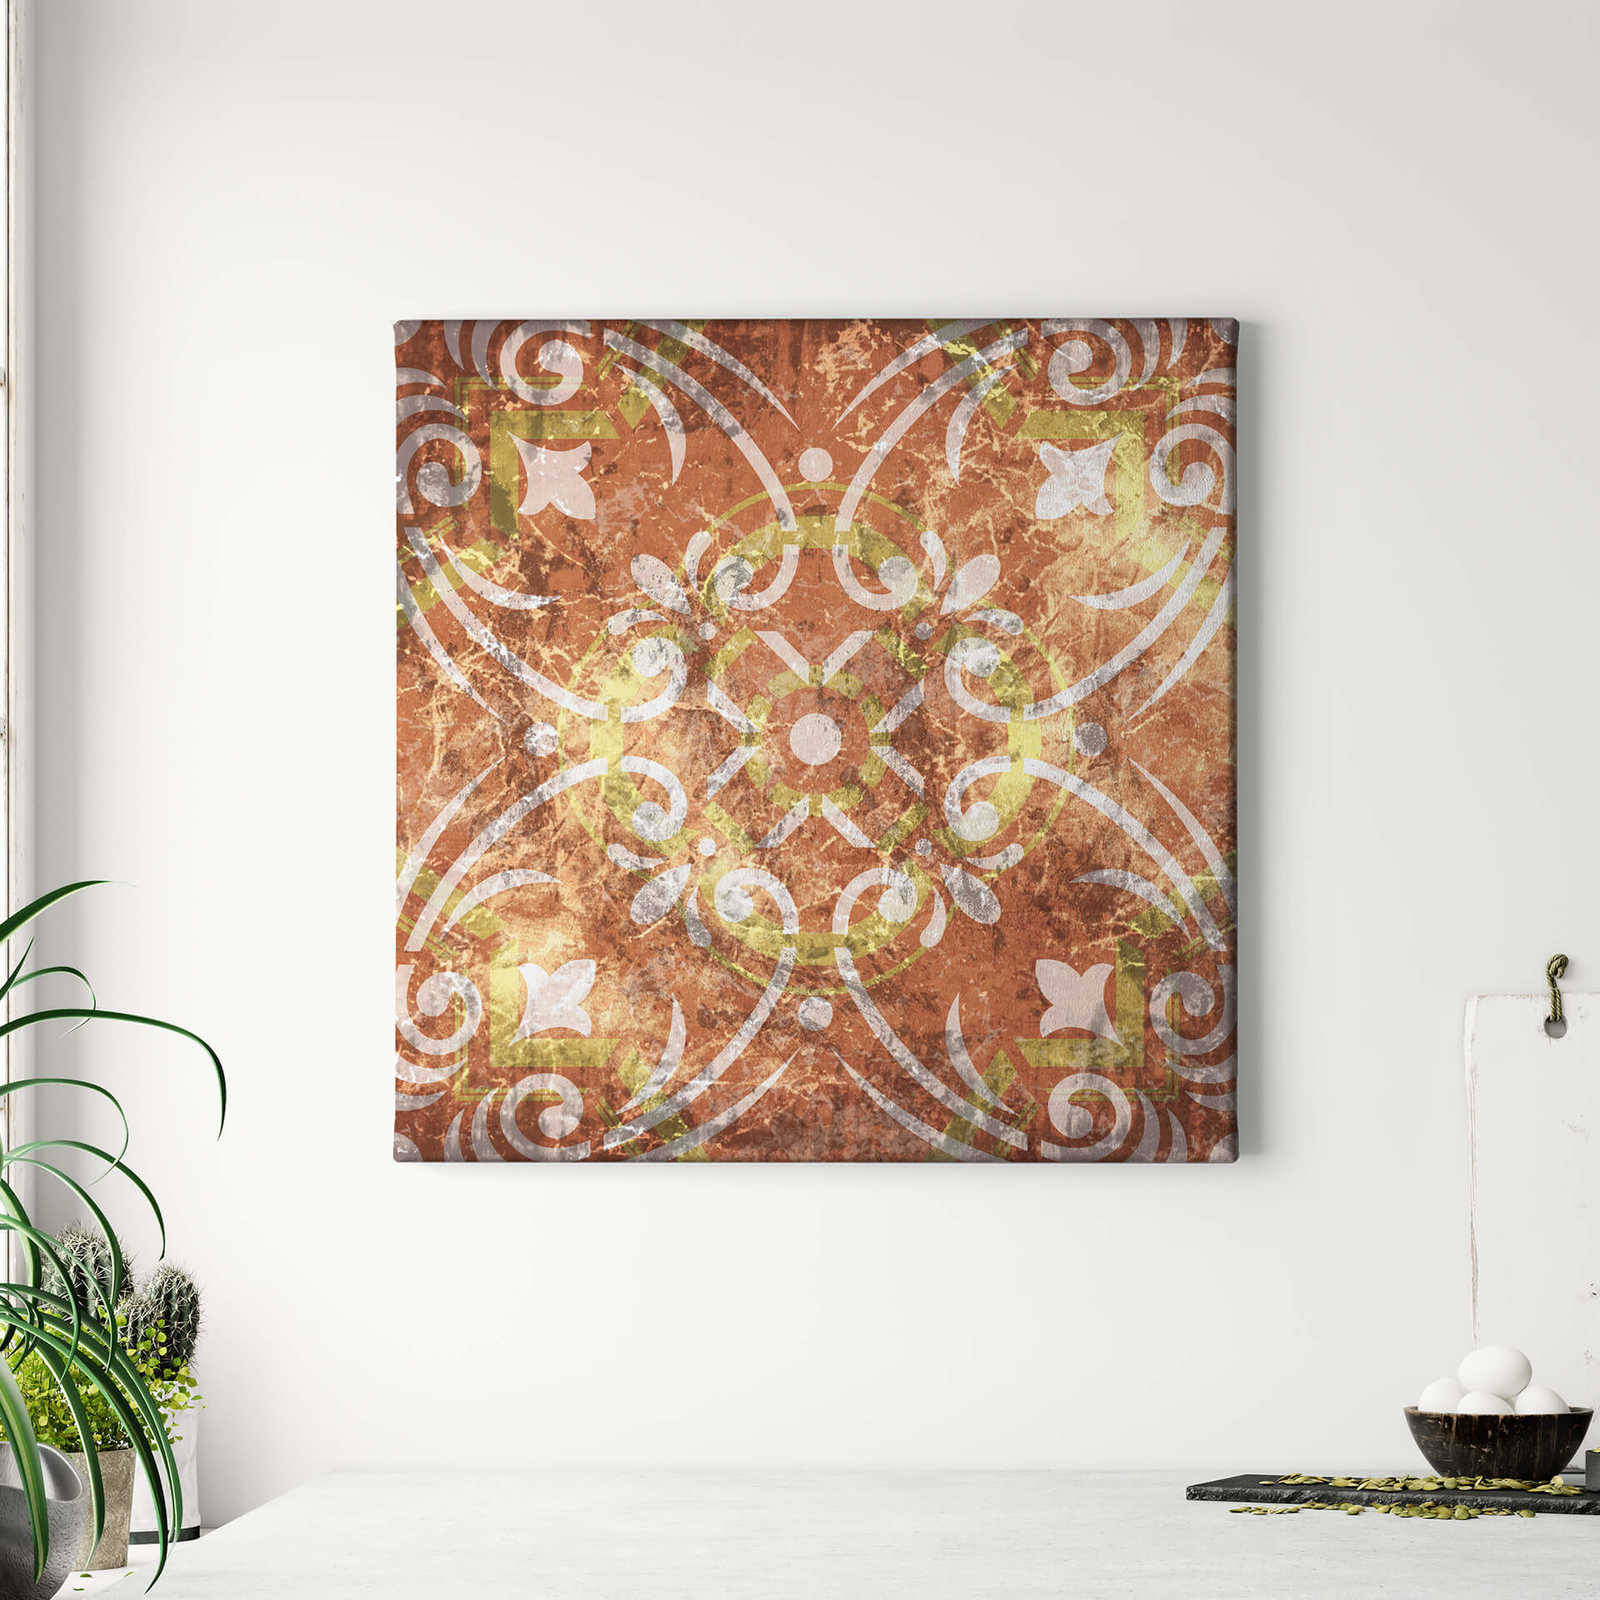             Square Canvas print Mediterranean ornament design – orange
        